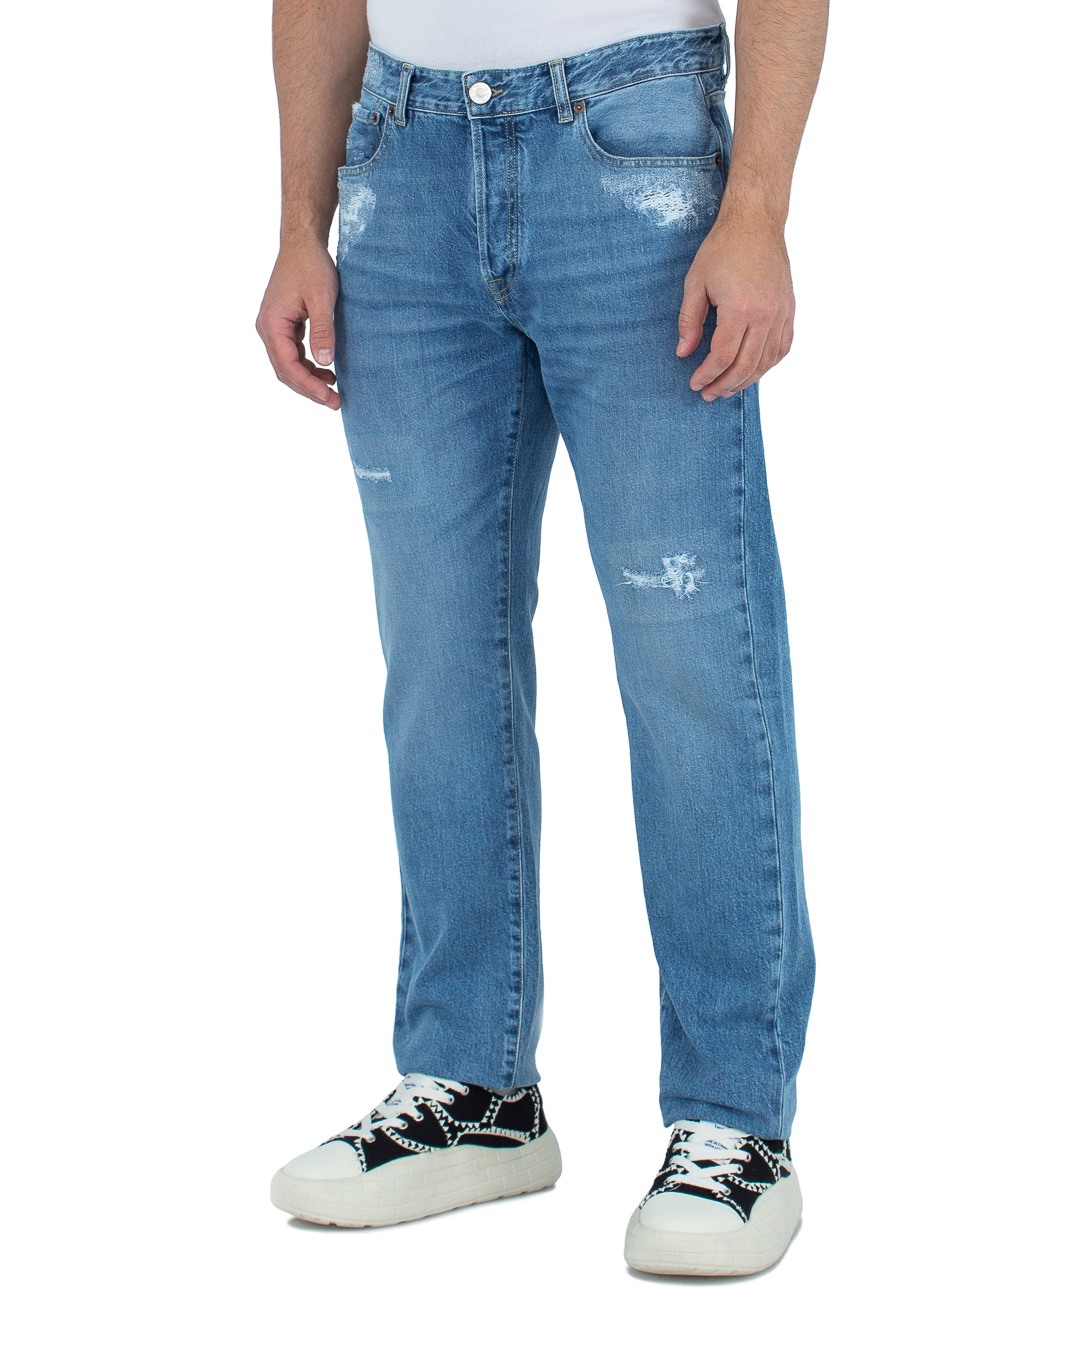 джинсы P.M.D.S S23J4184 101ED синий 33, размер 33 - фото 3